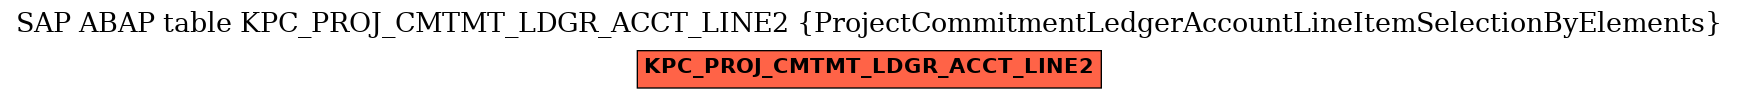 E-R Diagram for table KPC_PROJ_CMTMT_LDGR_ACCT_LINE2 (ProjectCommitmentLedgerAccountLineItemSelectionByElements)